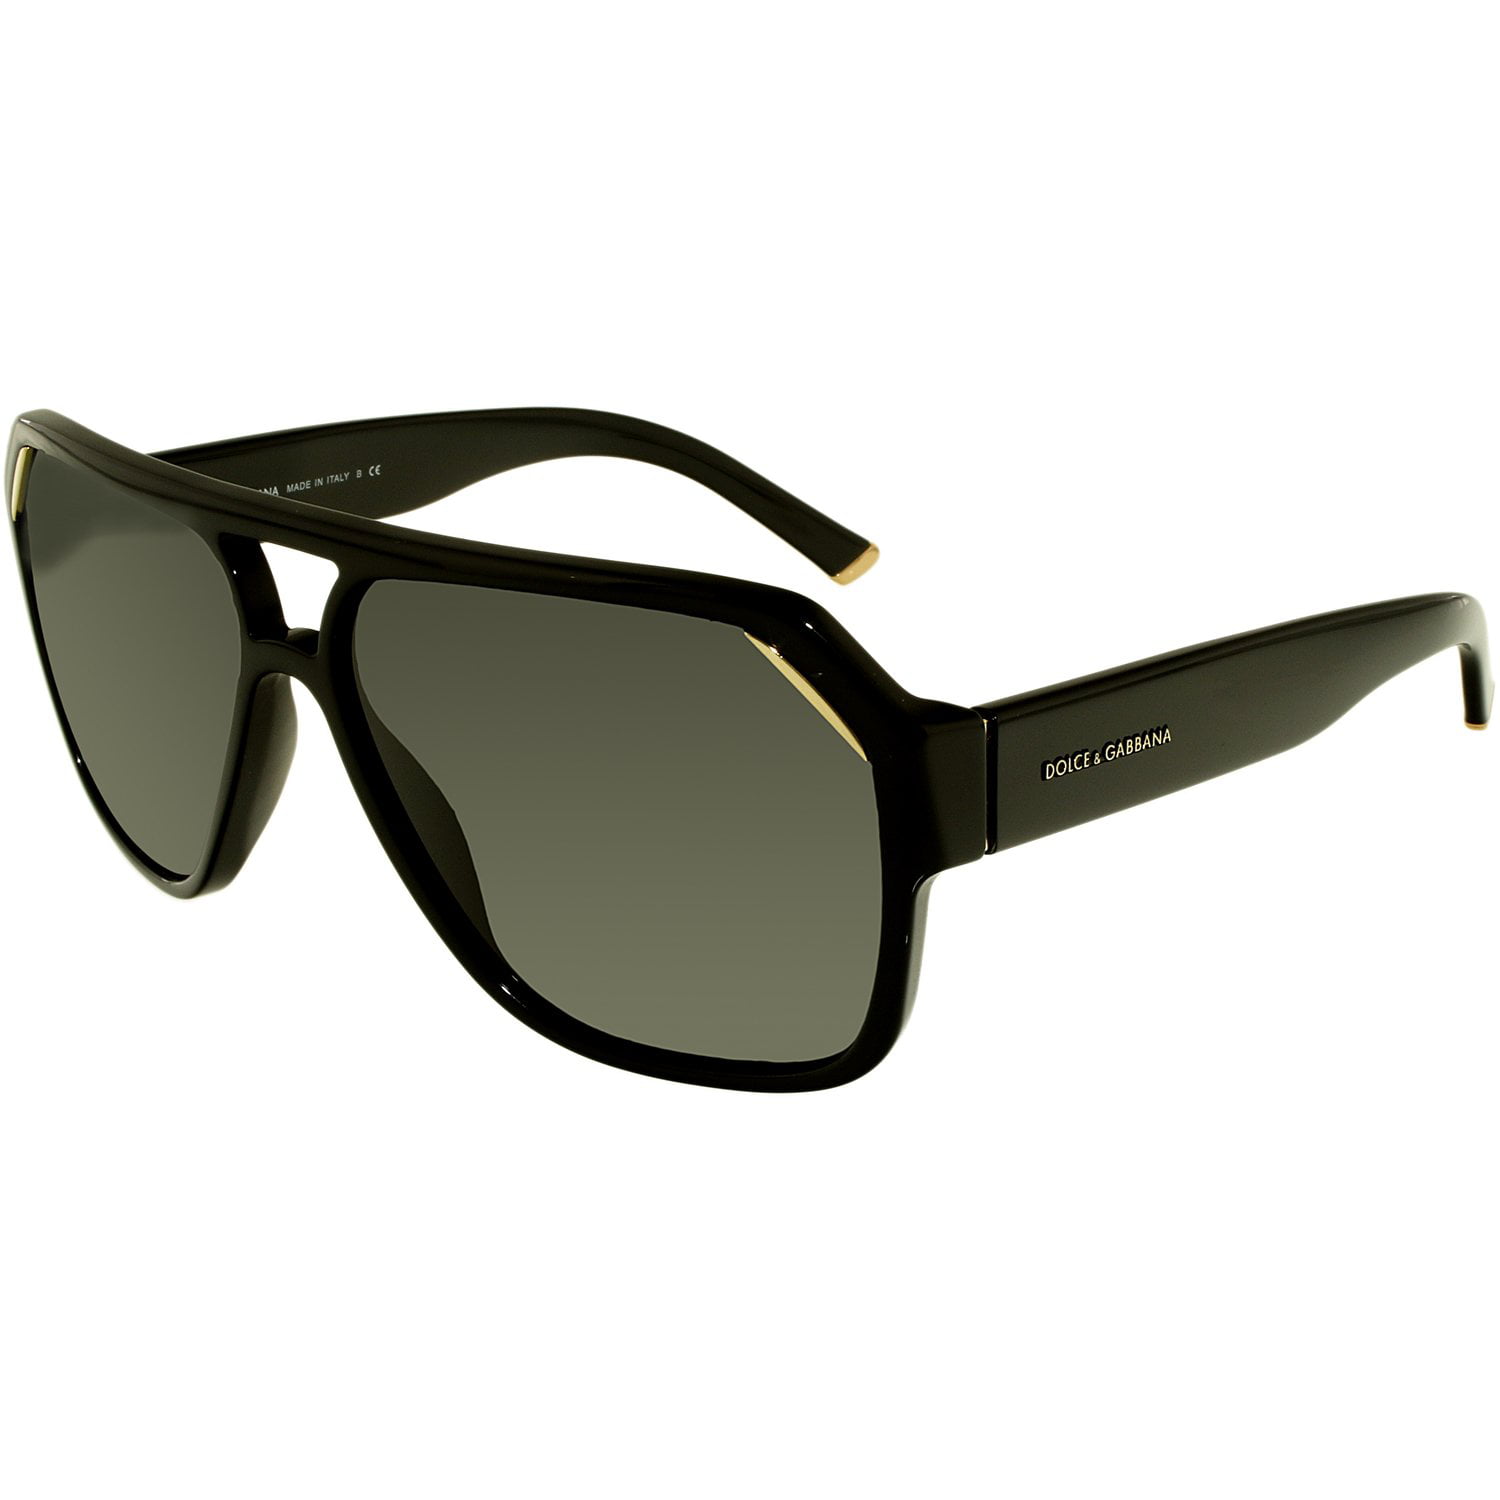 Dolce & Gabbana - Men's DG4138-501/87-62 Black Oval Sunglasses ...